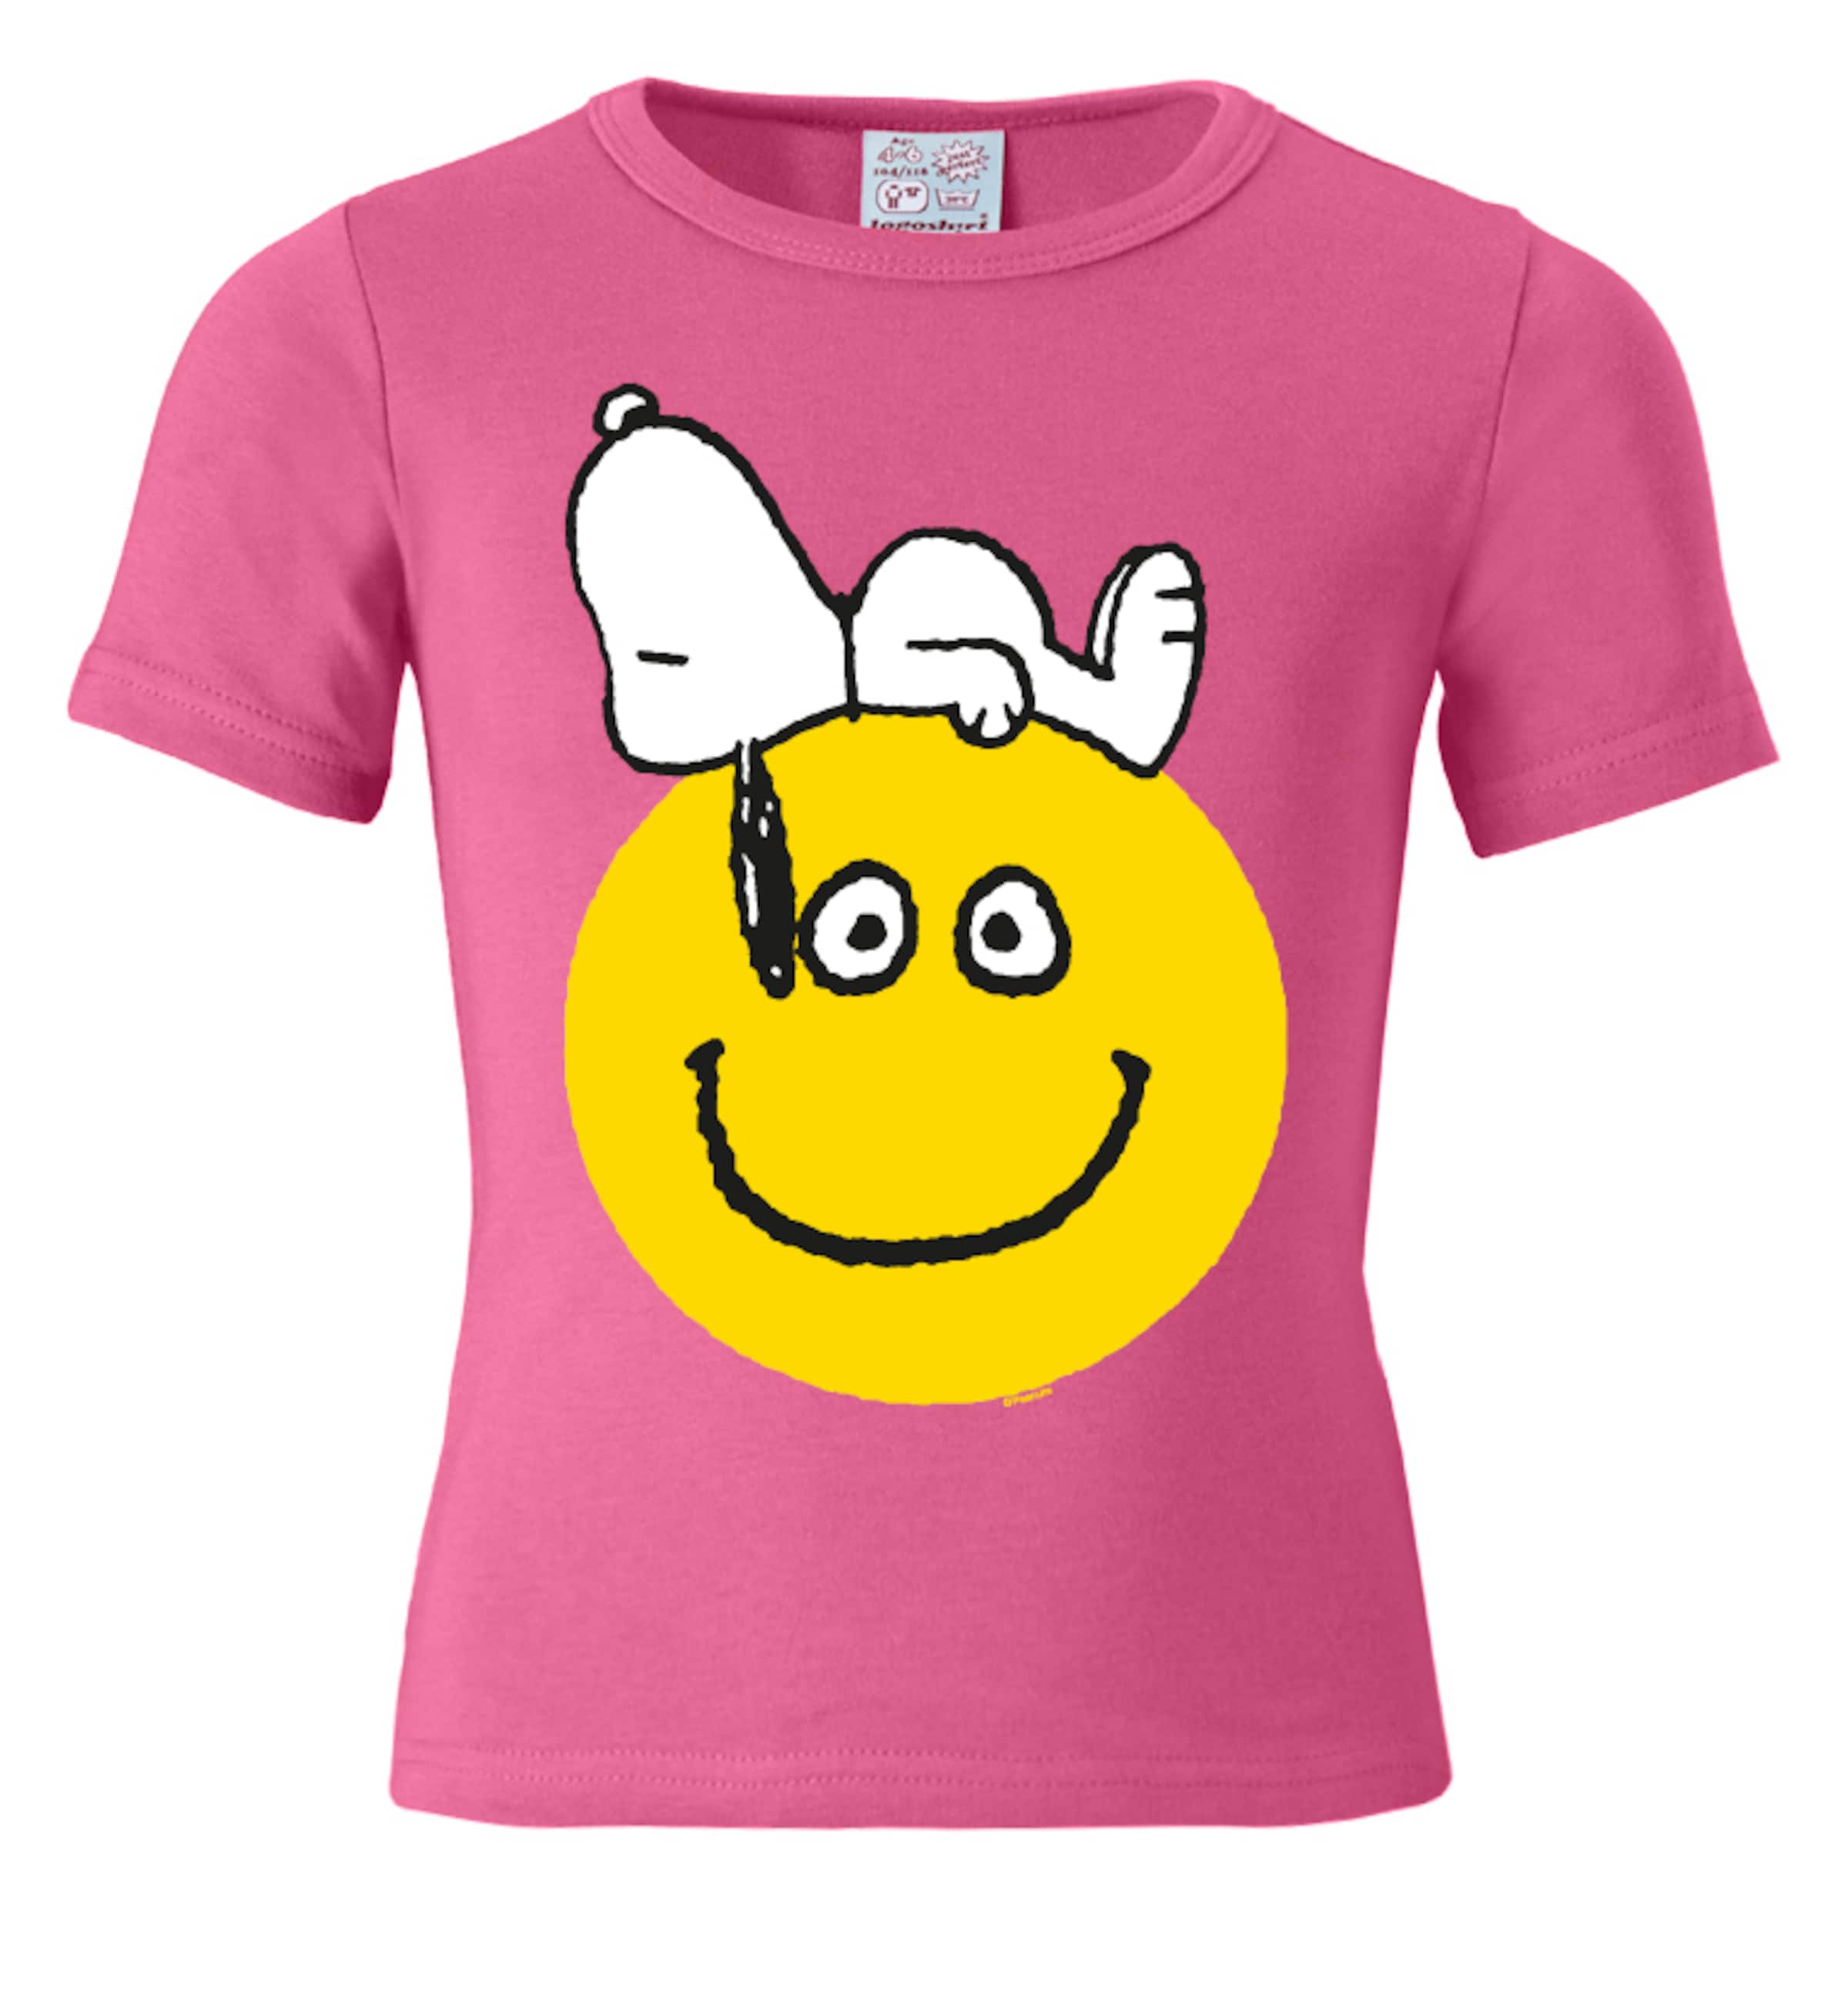 Kinder Teens (Gr. 140-176) LOGOSHIRT T-Shirt in Pink - NA00748